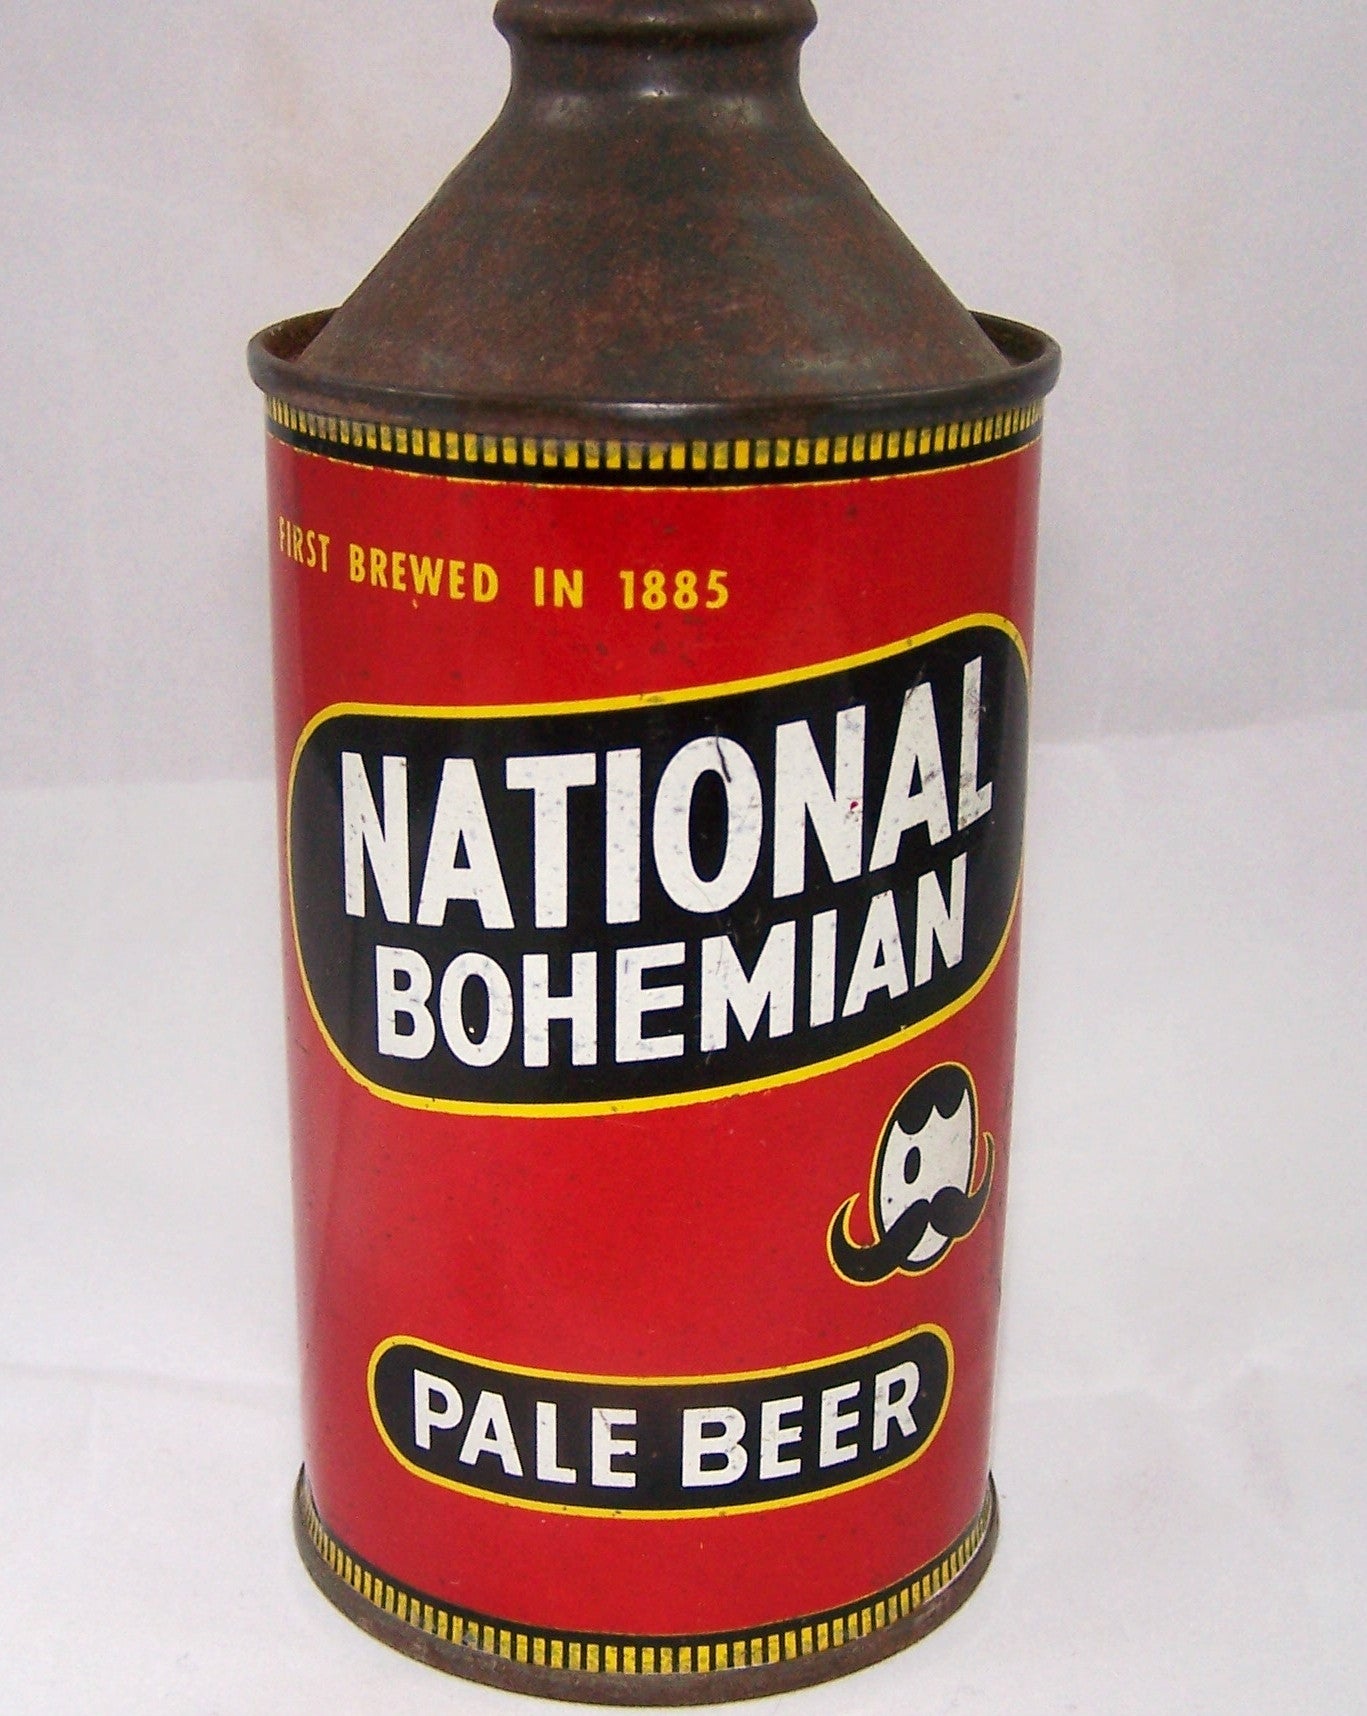 National Bohemian Pale Beer, USBC 175-8, Grade 1/1-